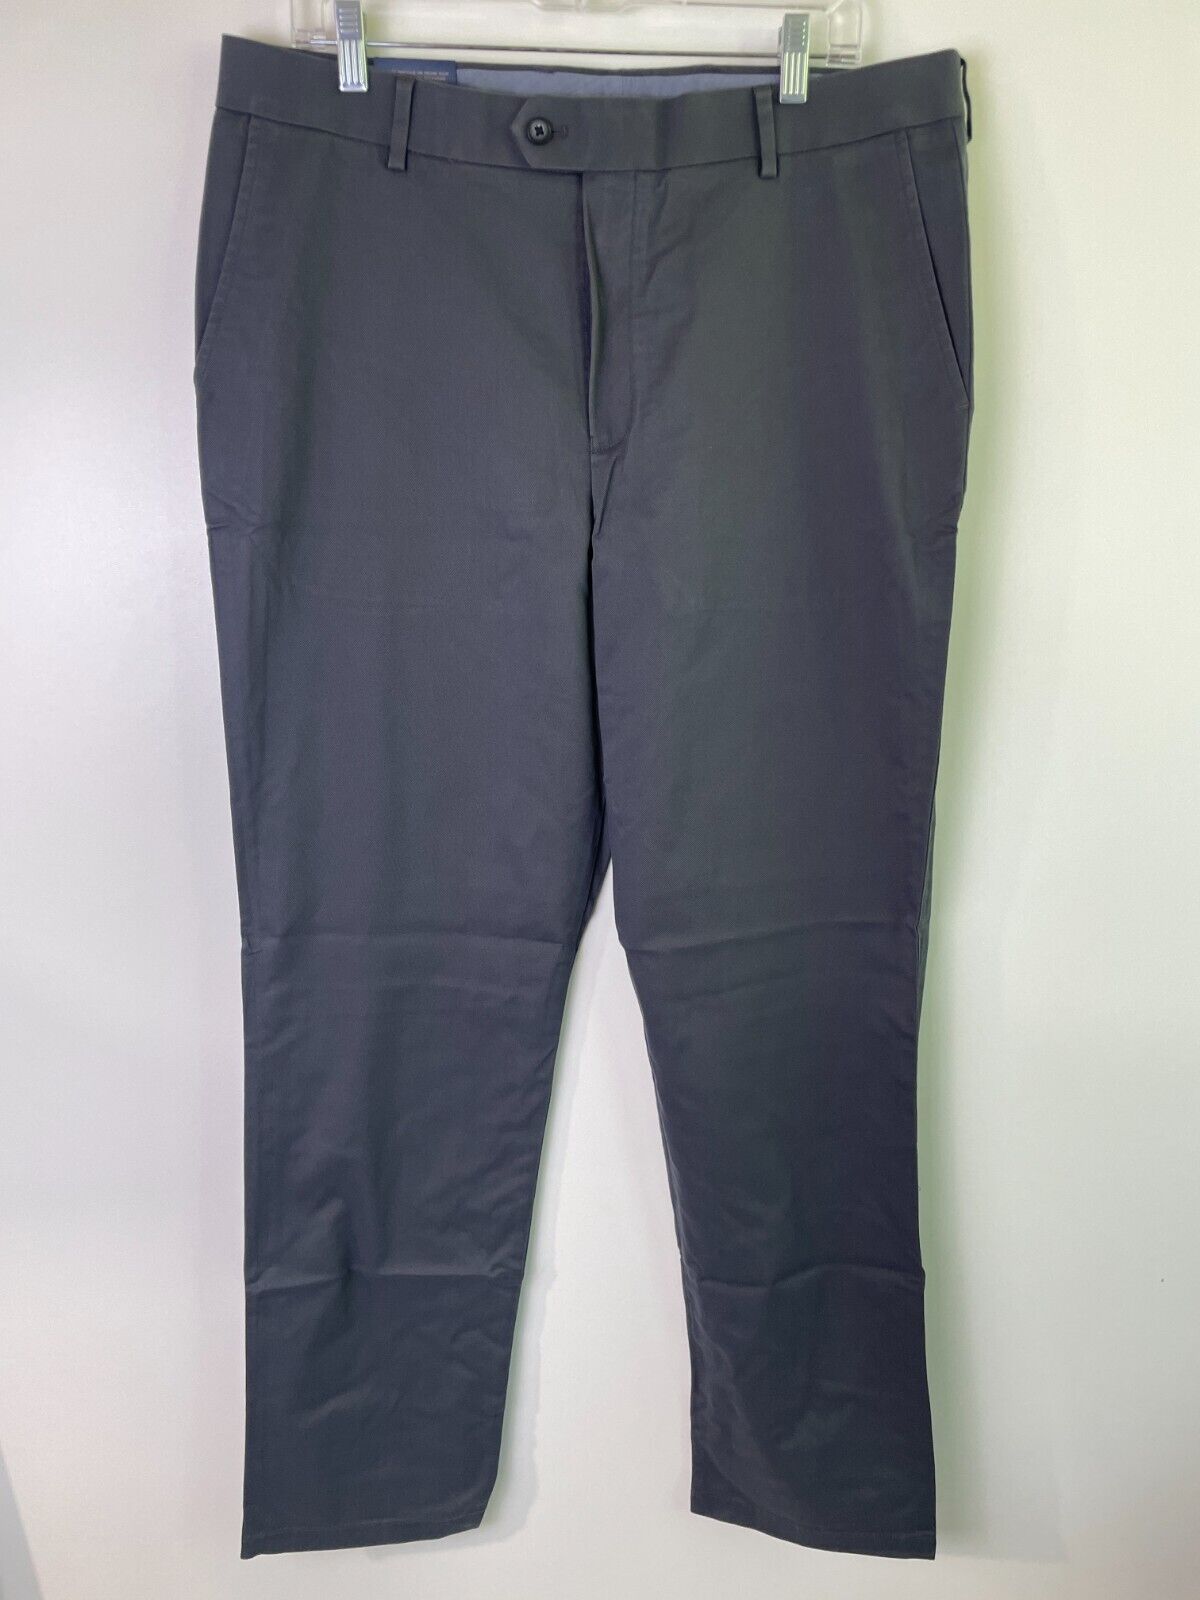 Charles Tyrwhitt Mens 36W/32L Ultimate Non-Iron Chino Pant Dark Gray TRC0269DYG